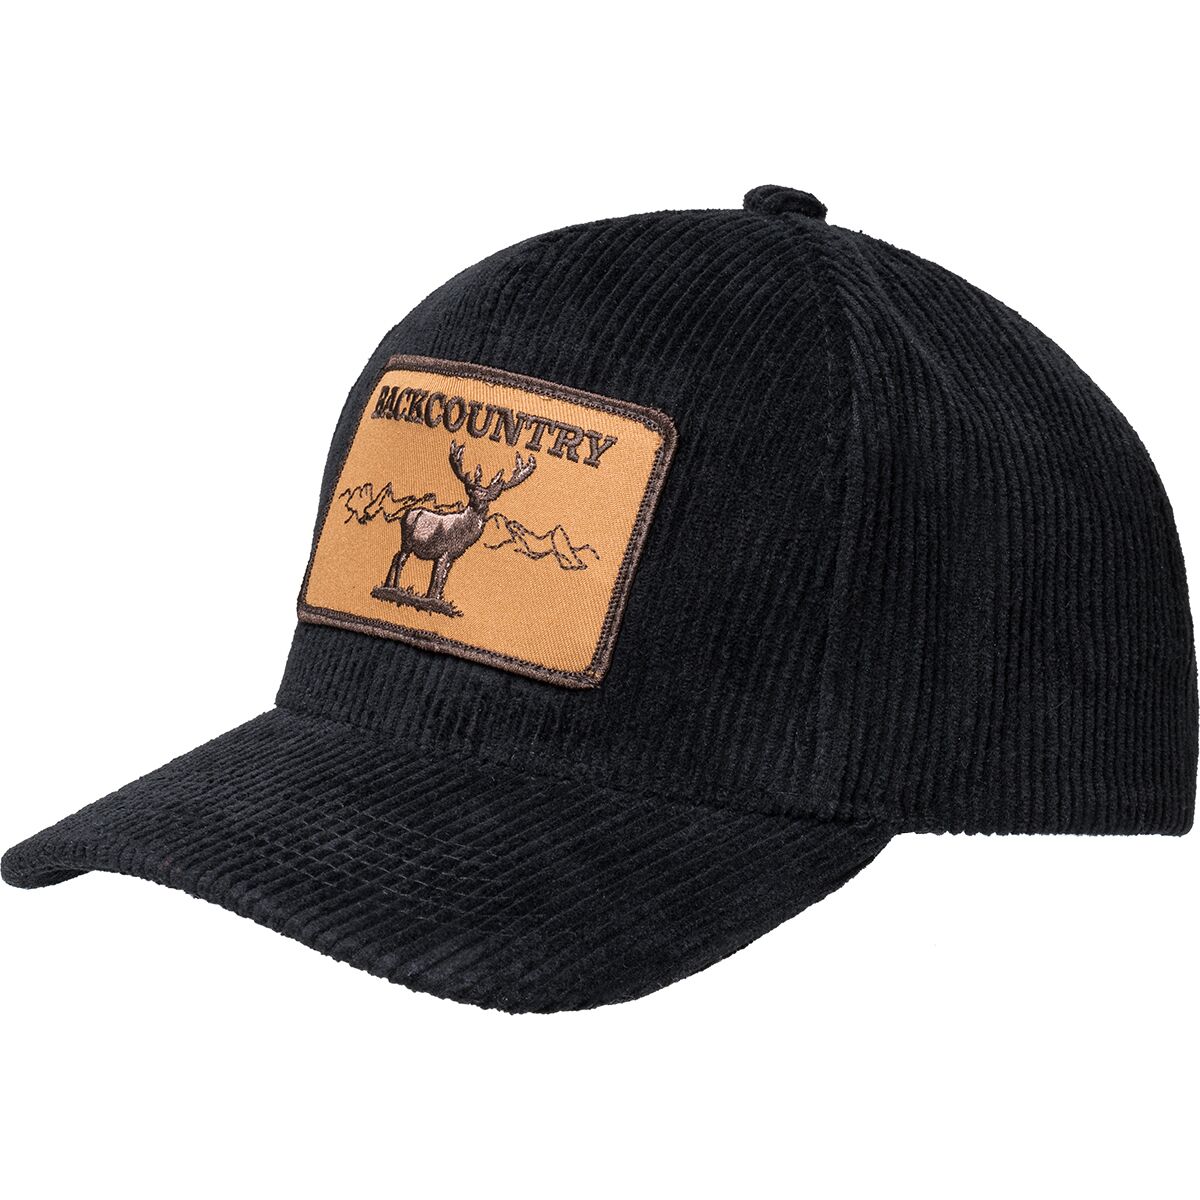 Hemlock Hat Company Backcountry Mesh Cap in Camo